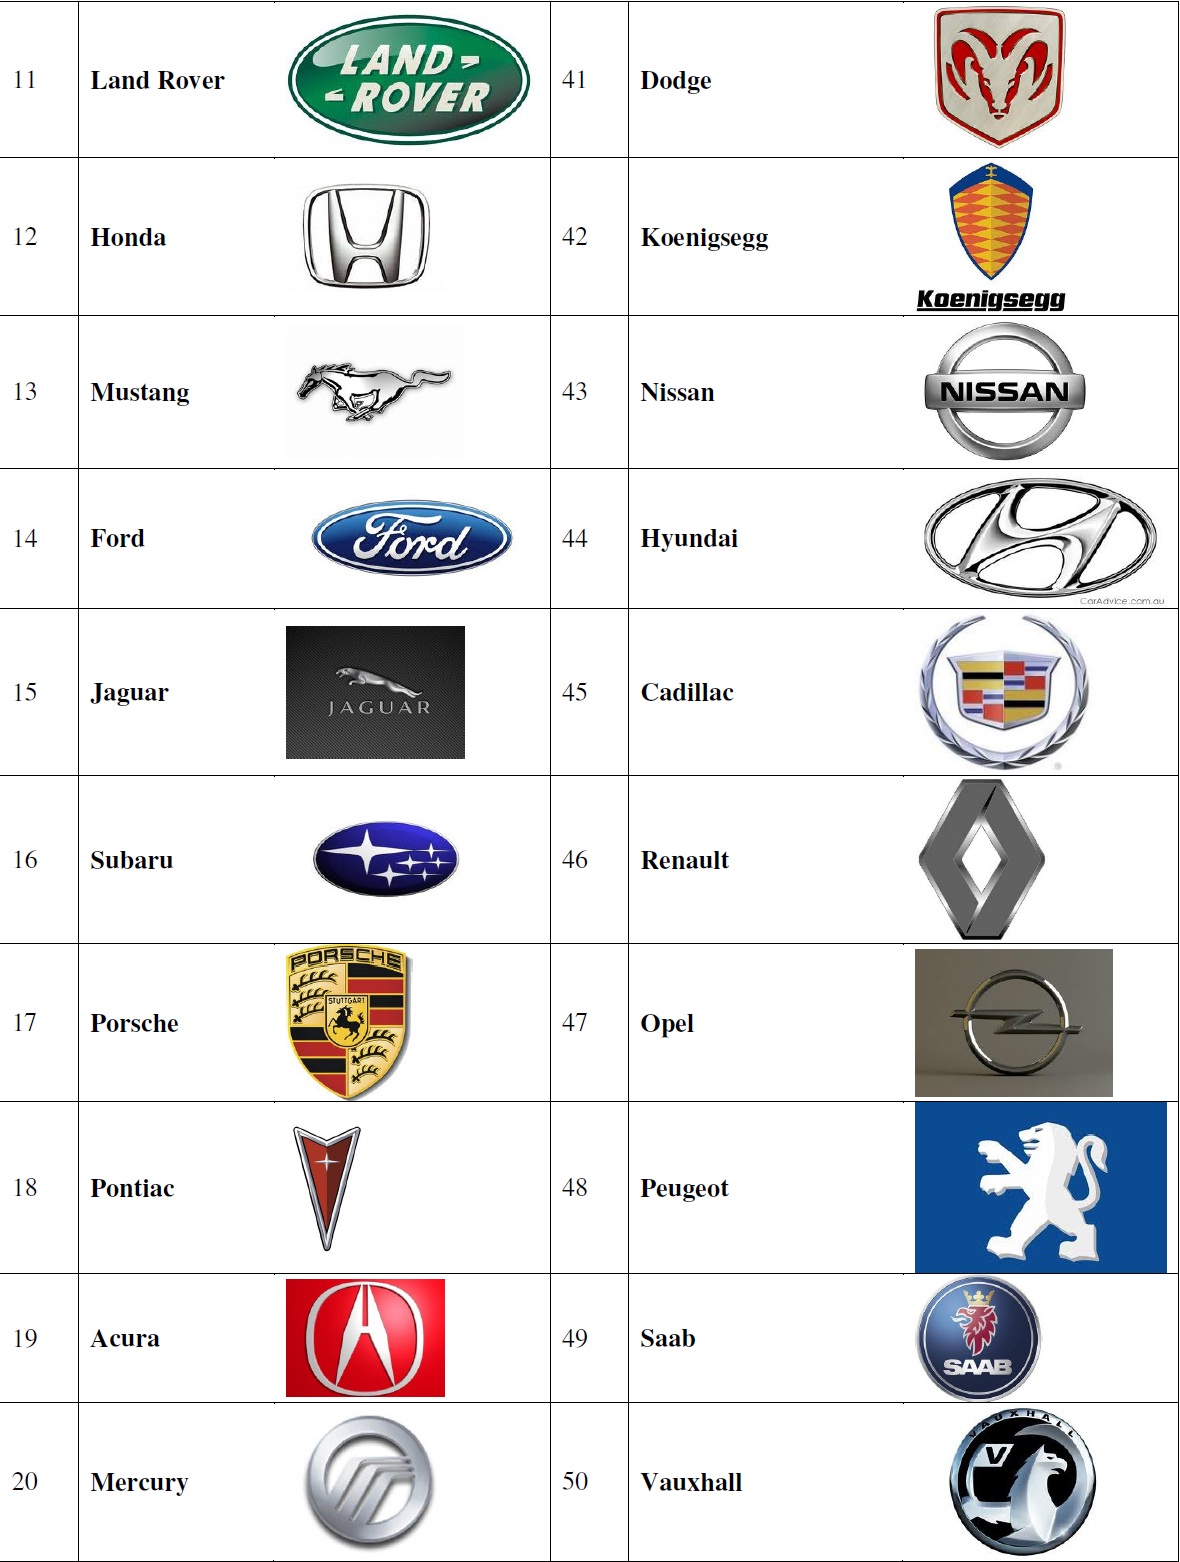 Car Brand Logos with Names